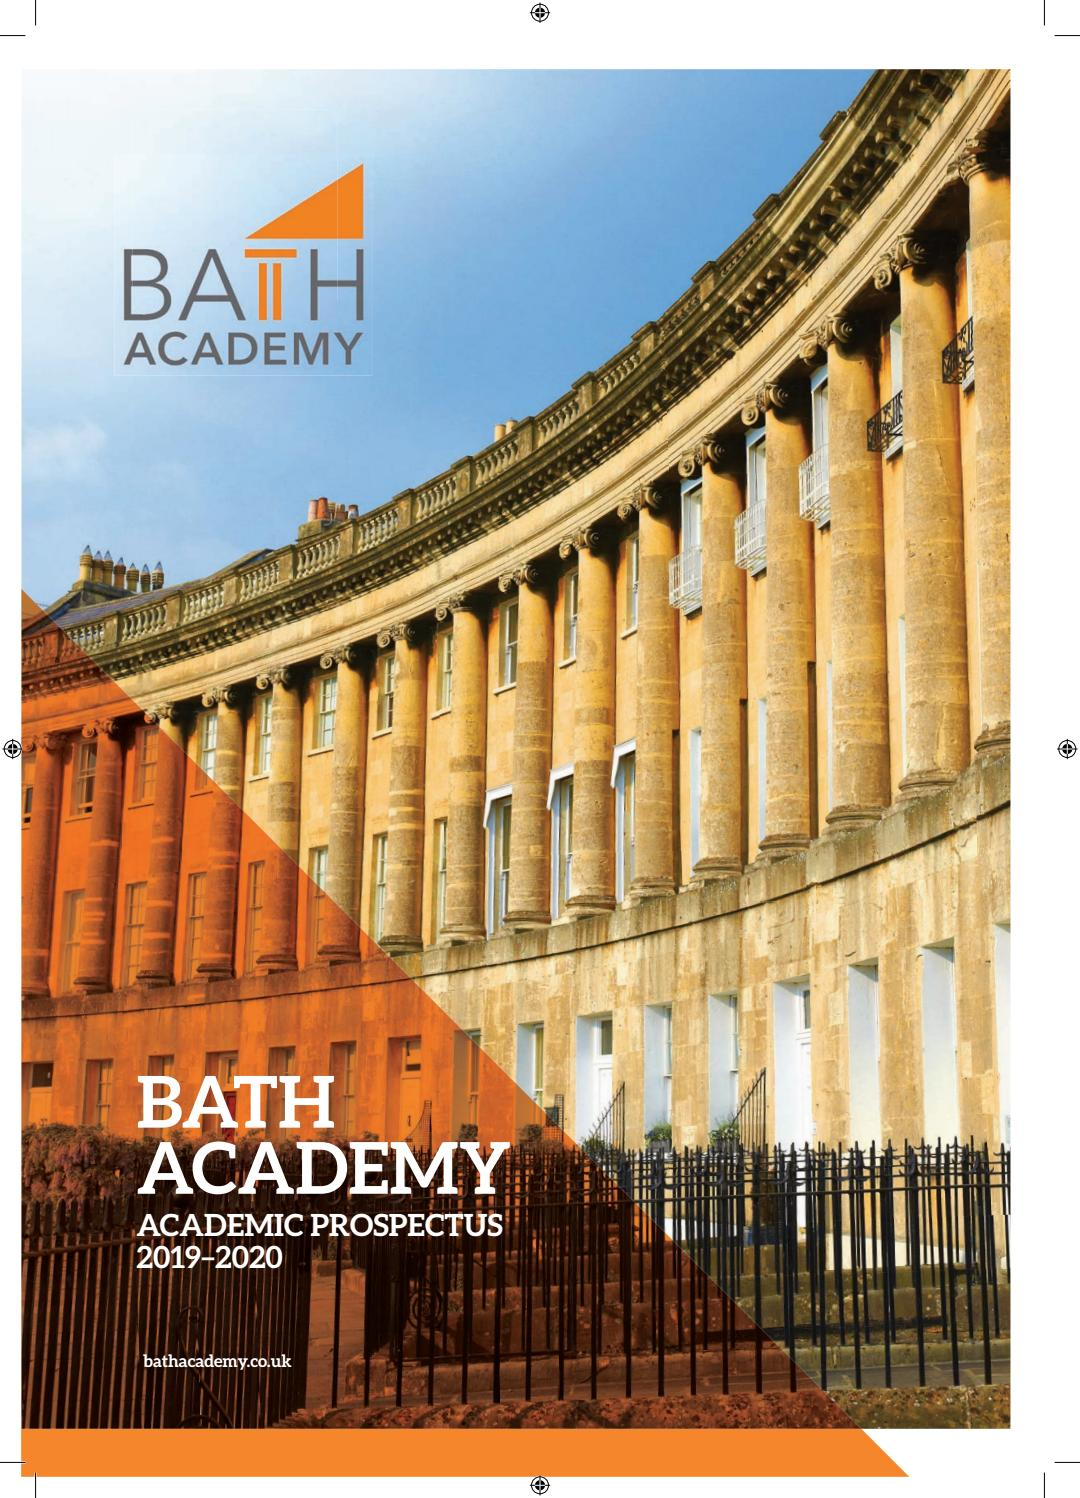 Bath Academy Academic Prospectus 2019 2020 By Chris Knight Issuu